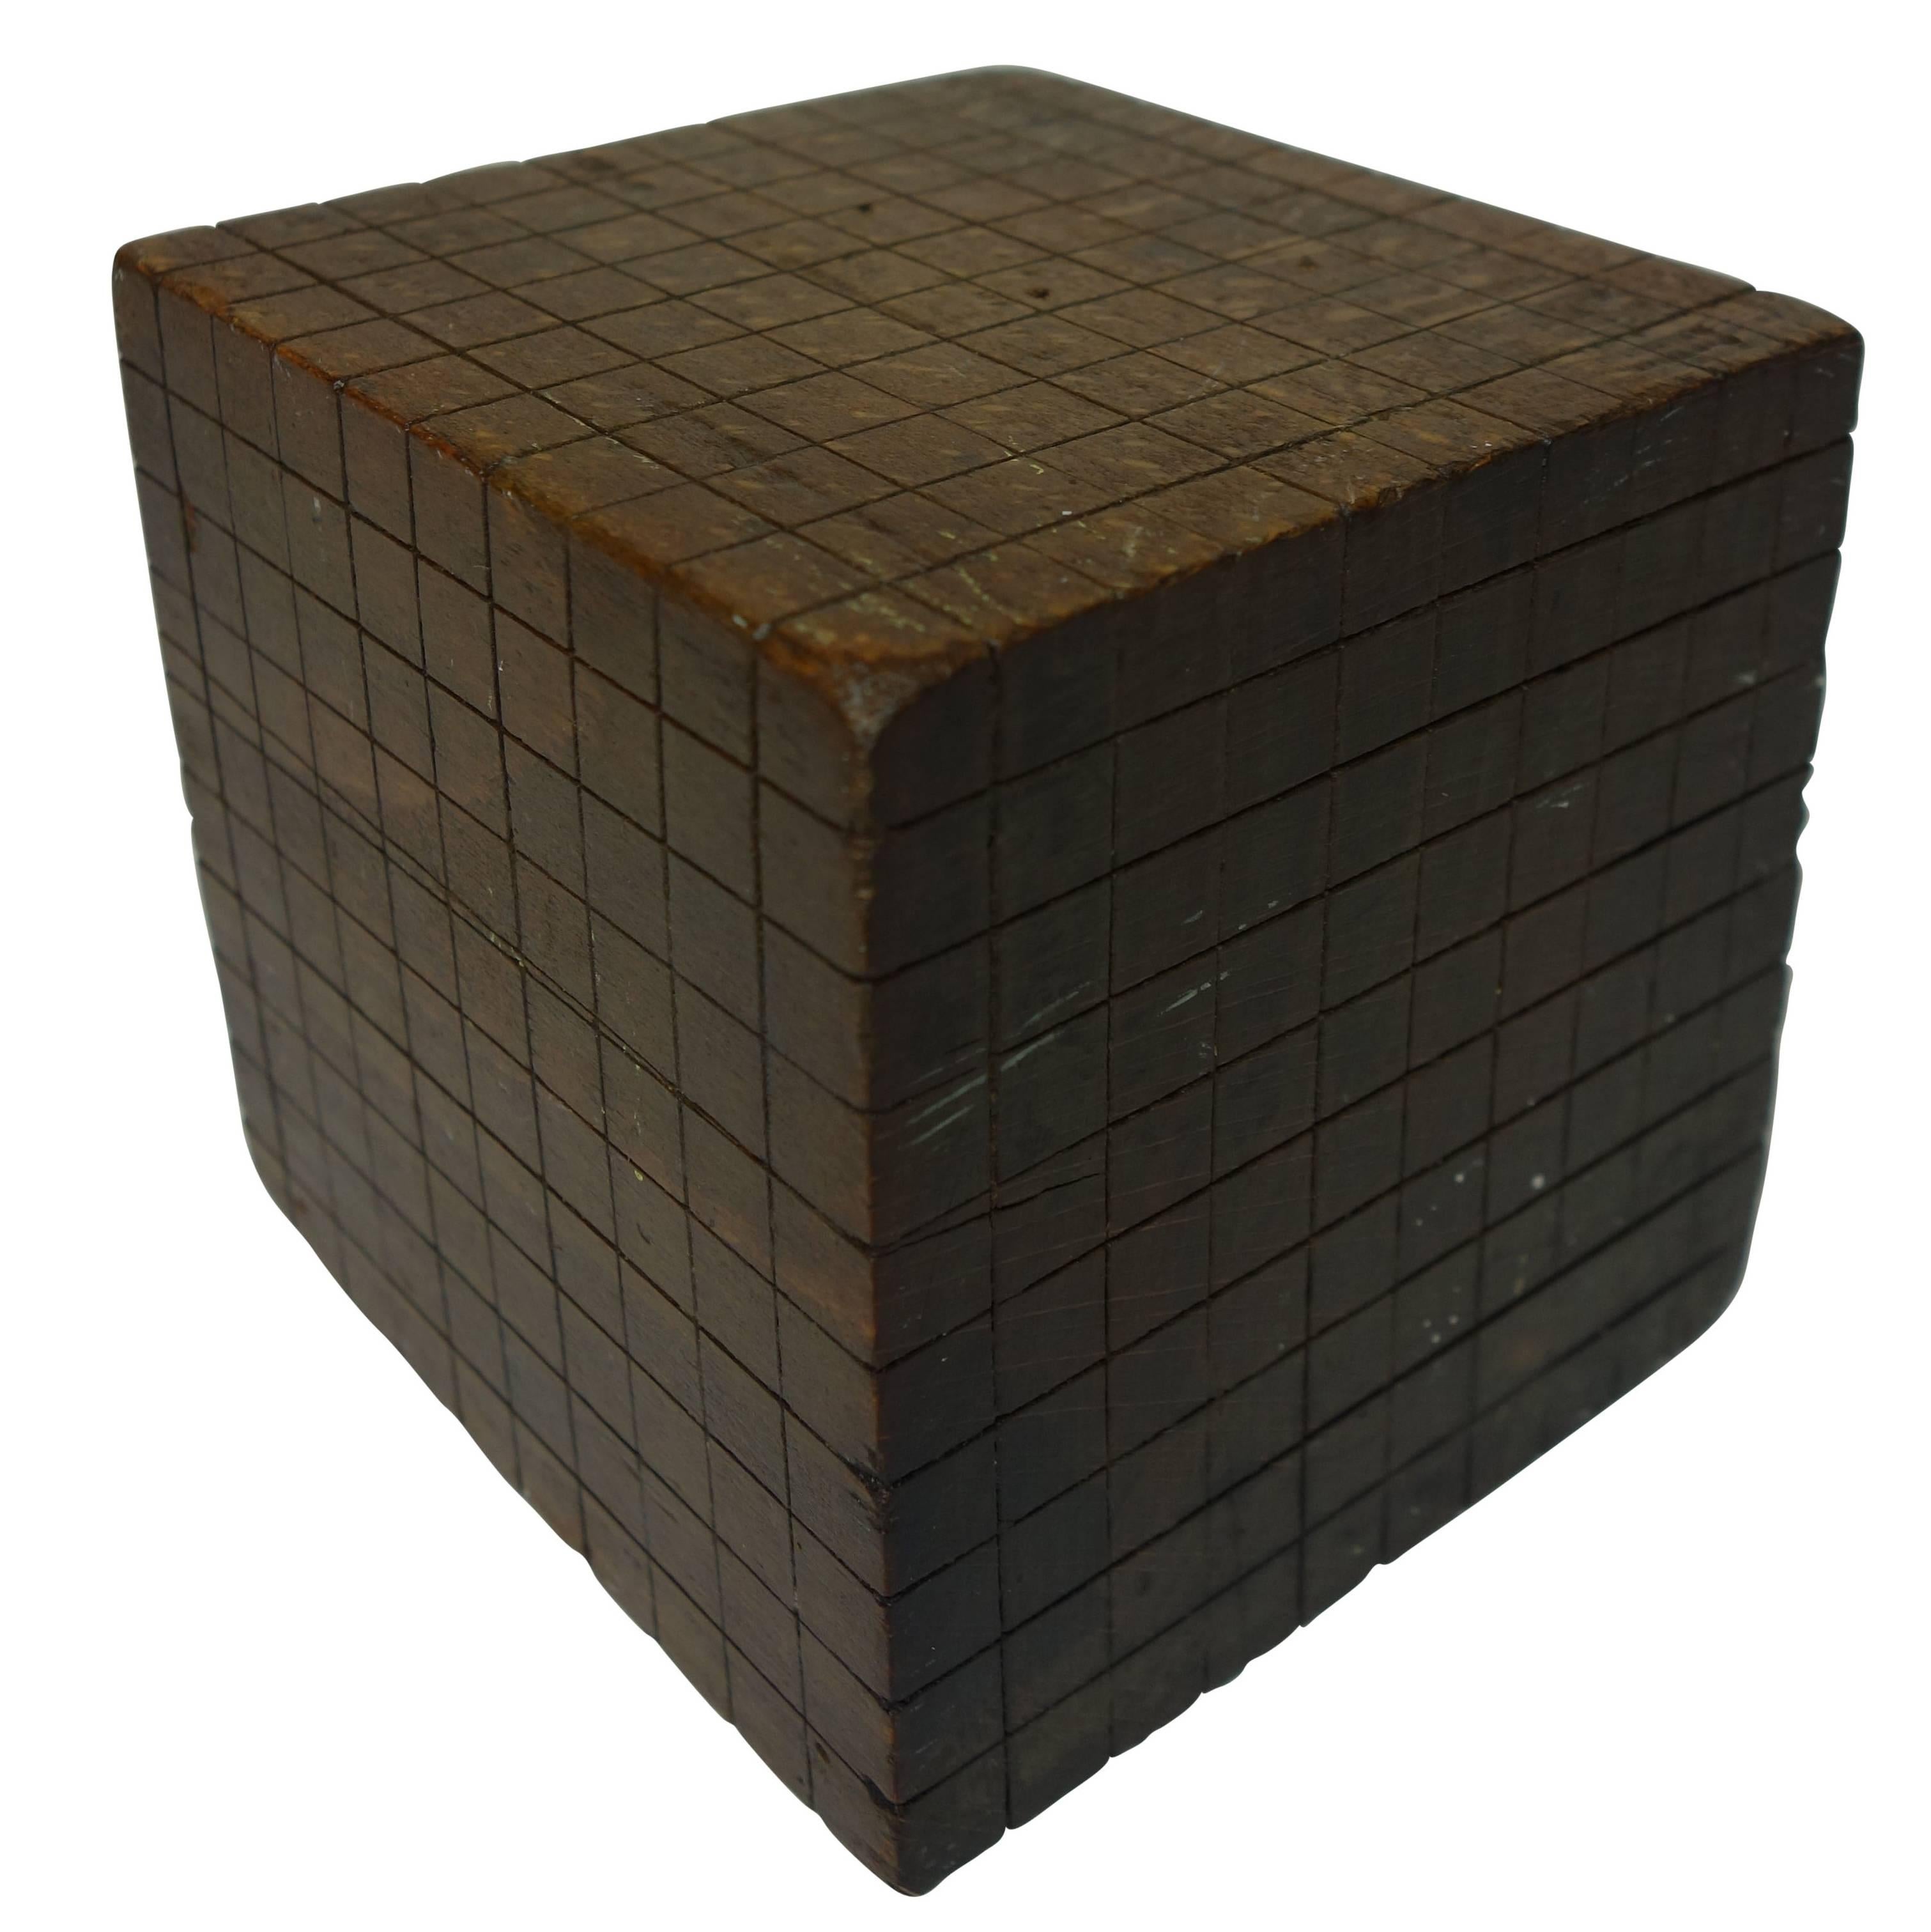 Wood “Base Ten” Cube Educational Model